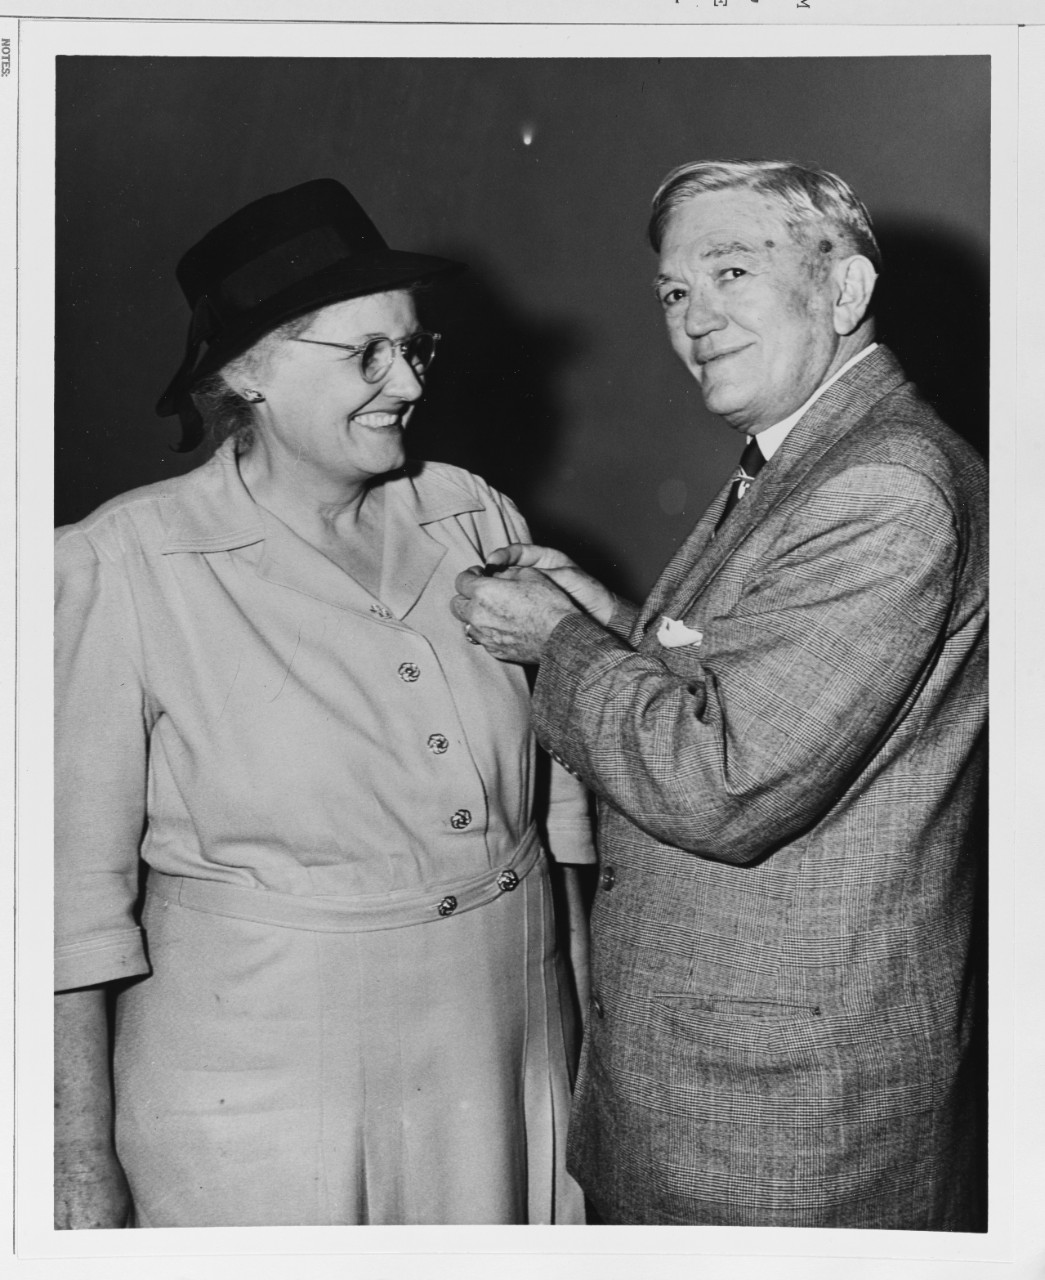 The Sister of Fleet Admiral Nimitz, Mrs. Dora Reagan, Receives a Medal